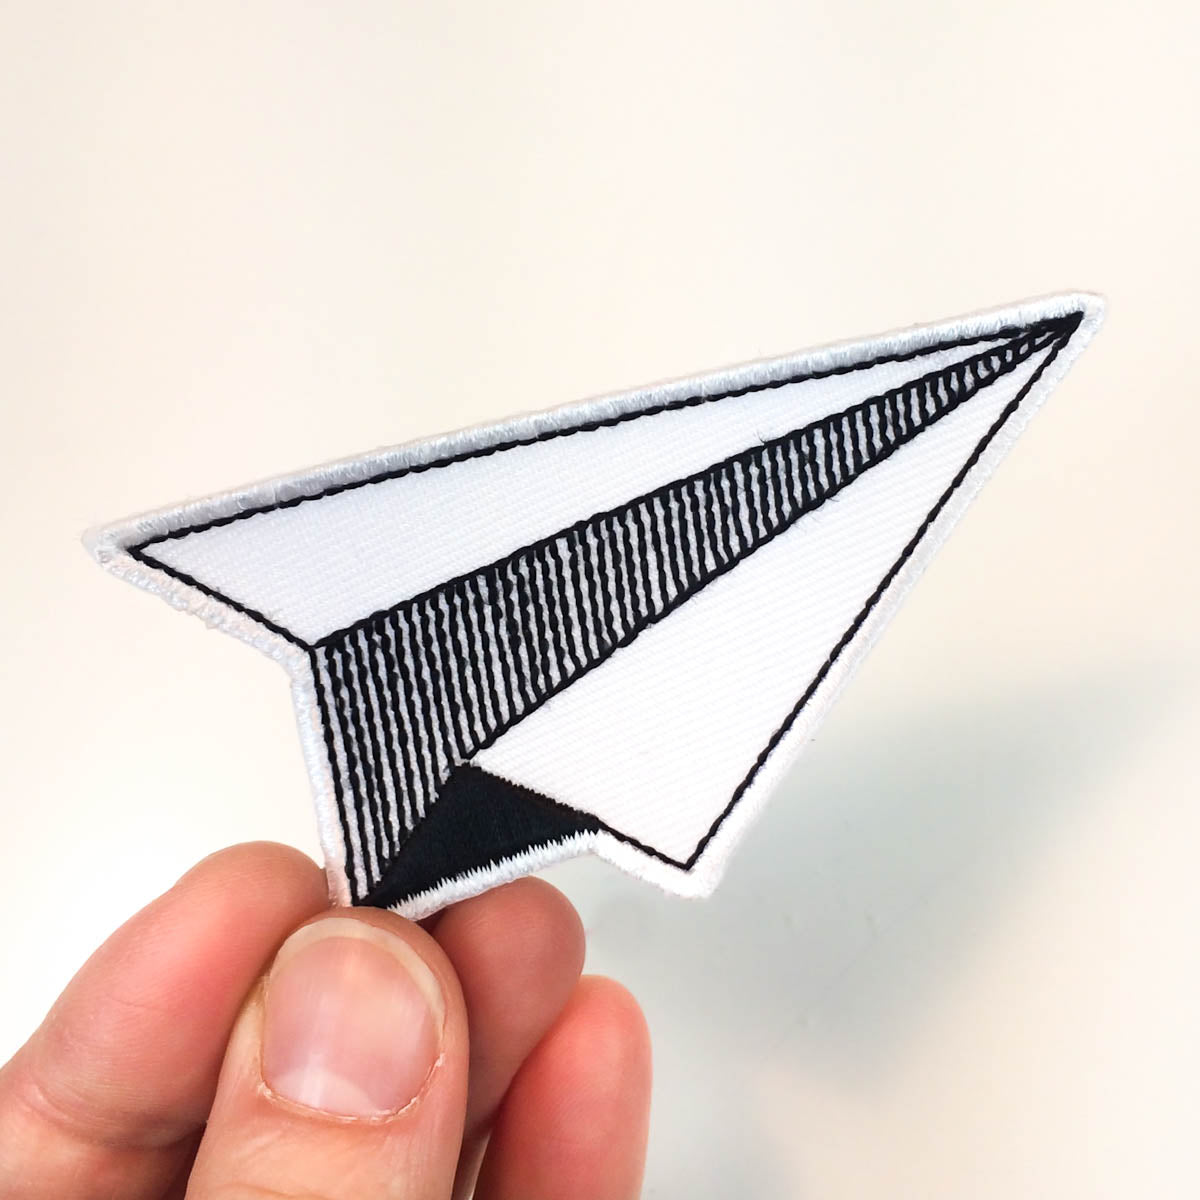 Geometric Patch Set #3 (3 pieces) - Airplane, Bird, Rose